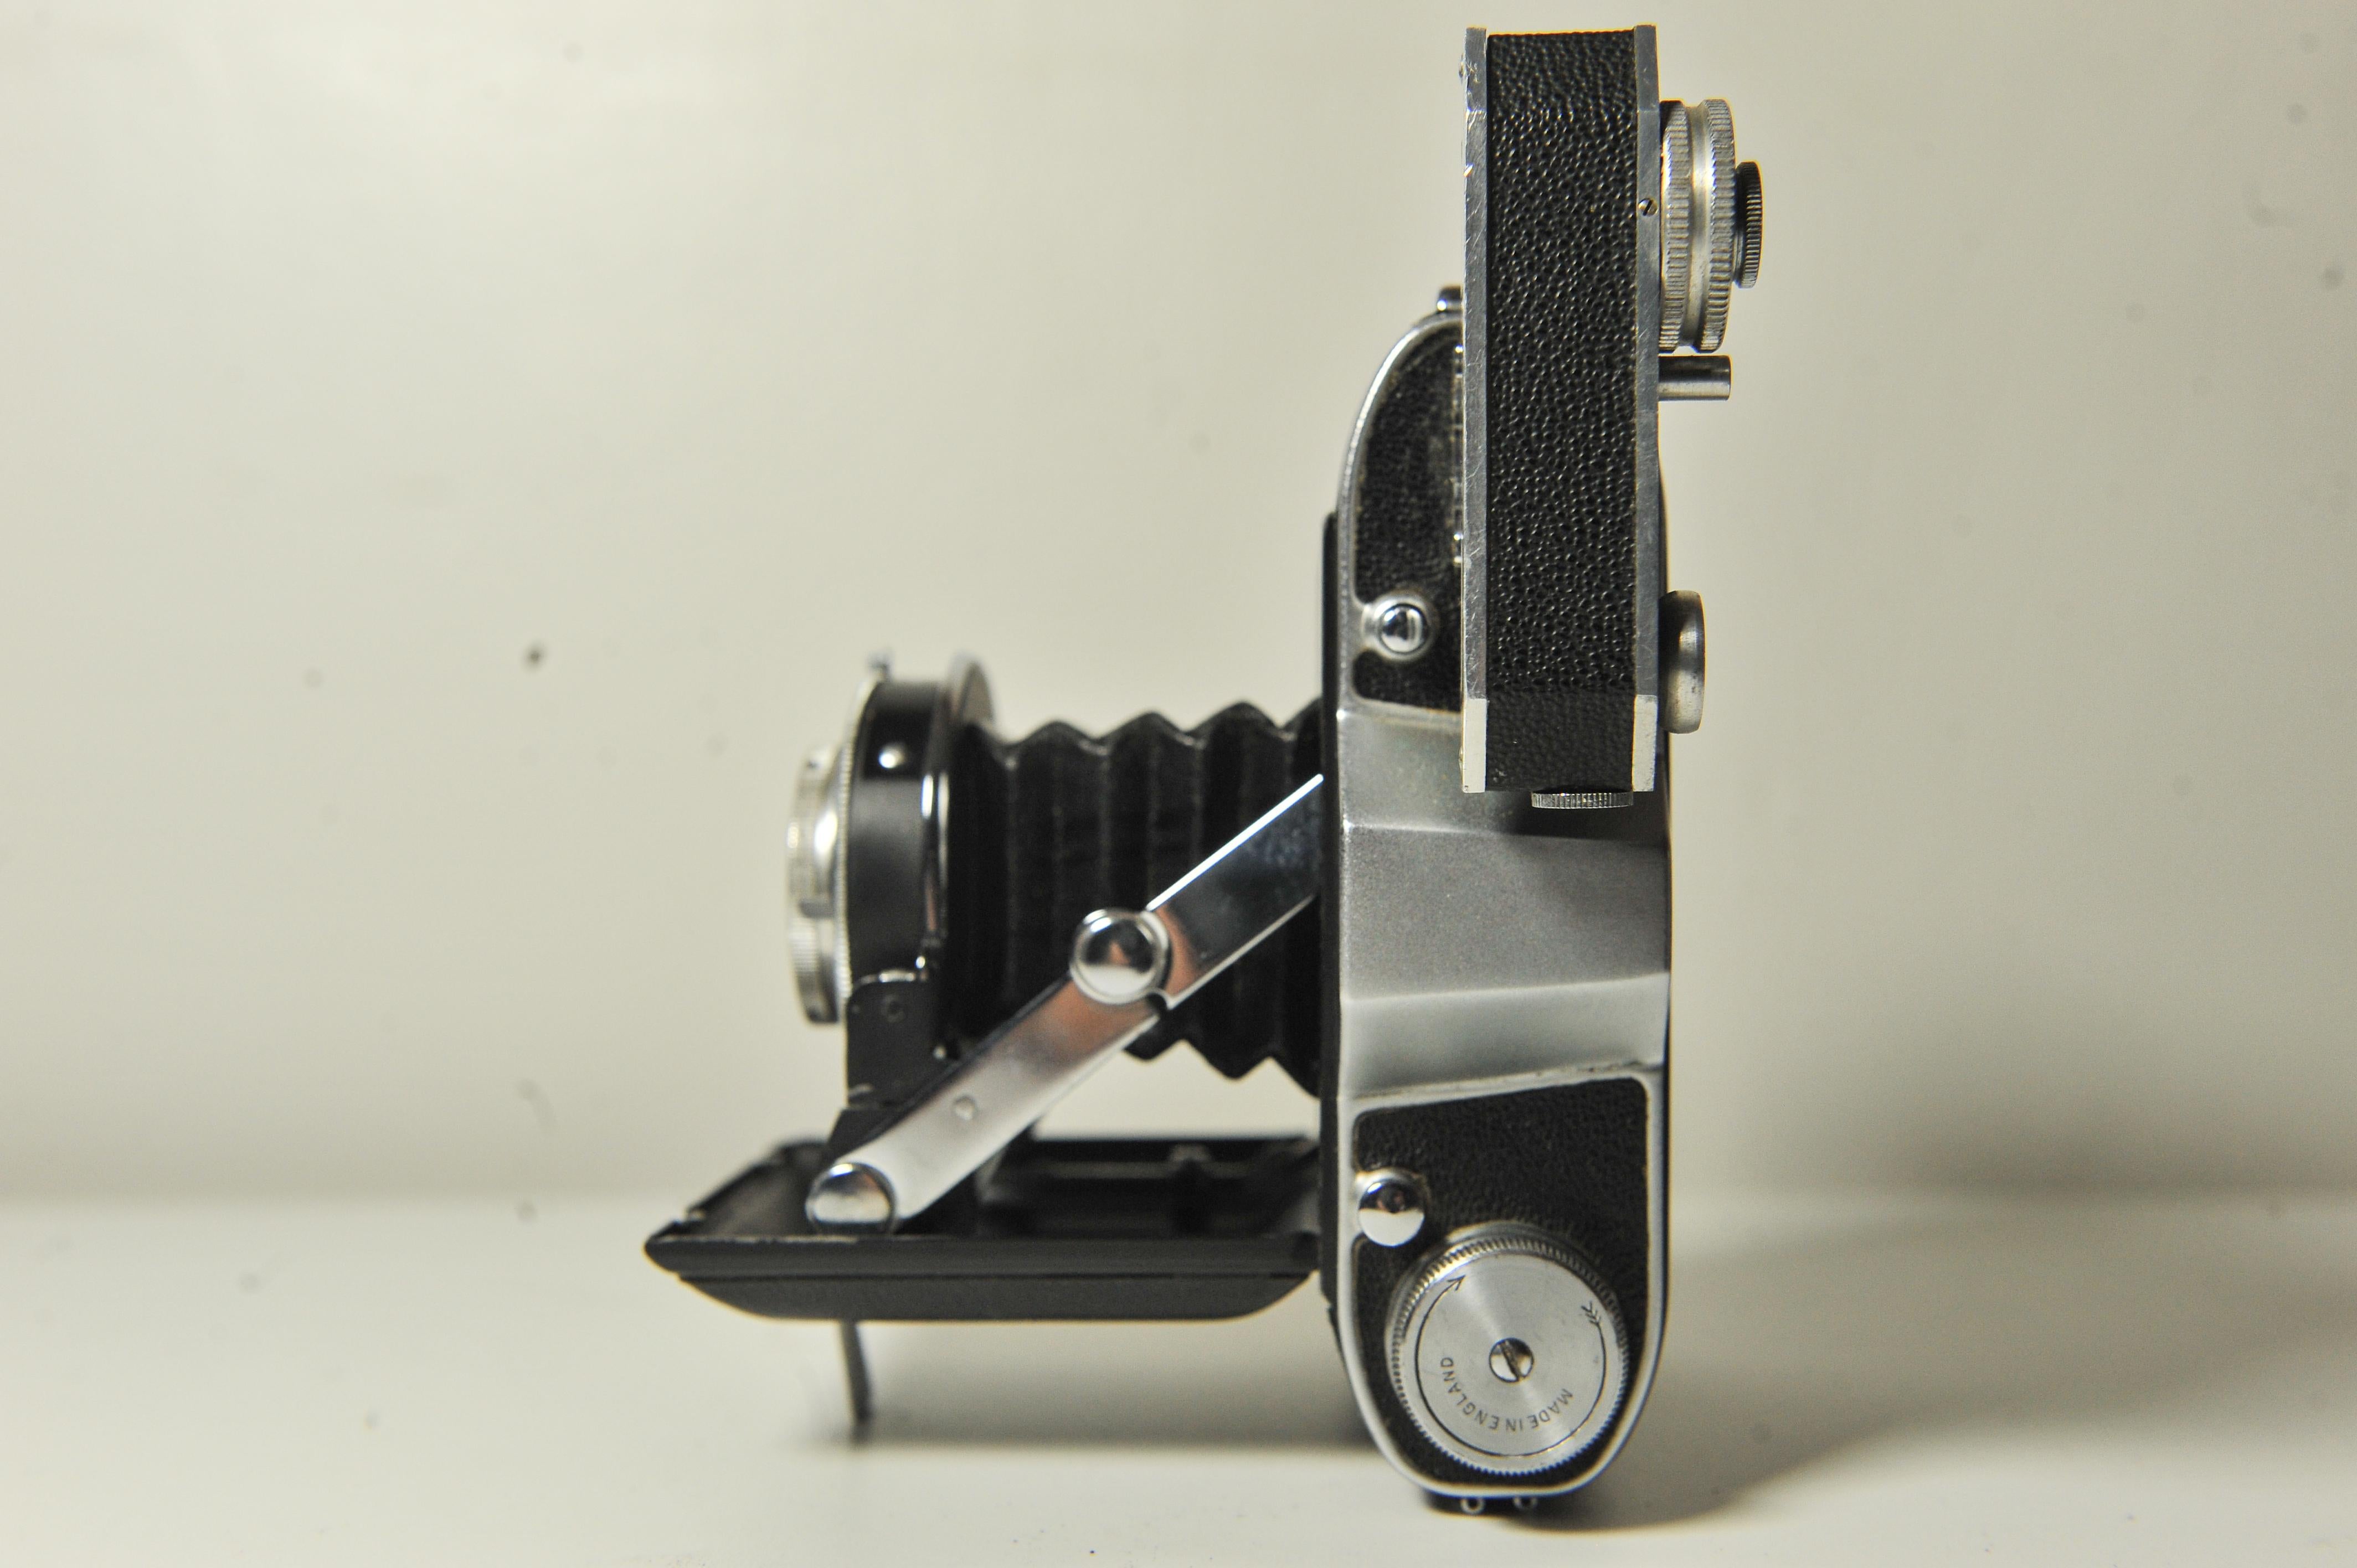 A British Made Ensign Selfix 16-20 Strut Folding 120 Roll Film Camera With An Ensar Anastigmat 75mm F4.5 Fixed Lens With Epsilon Shutter & A Watameter Accessory Rangefinder 

